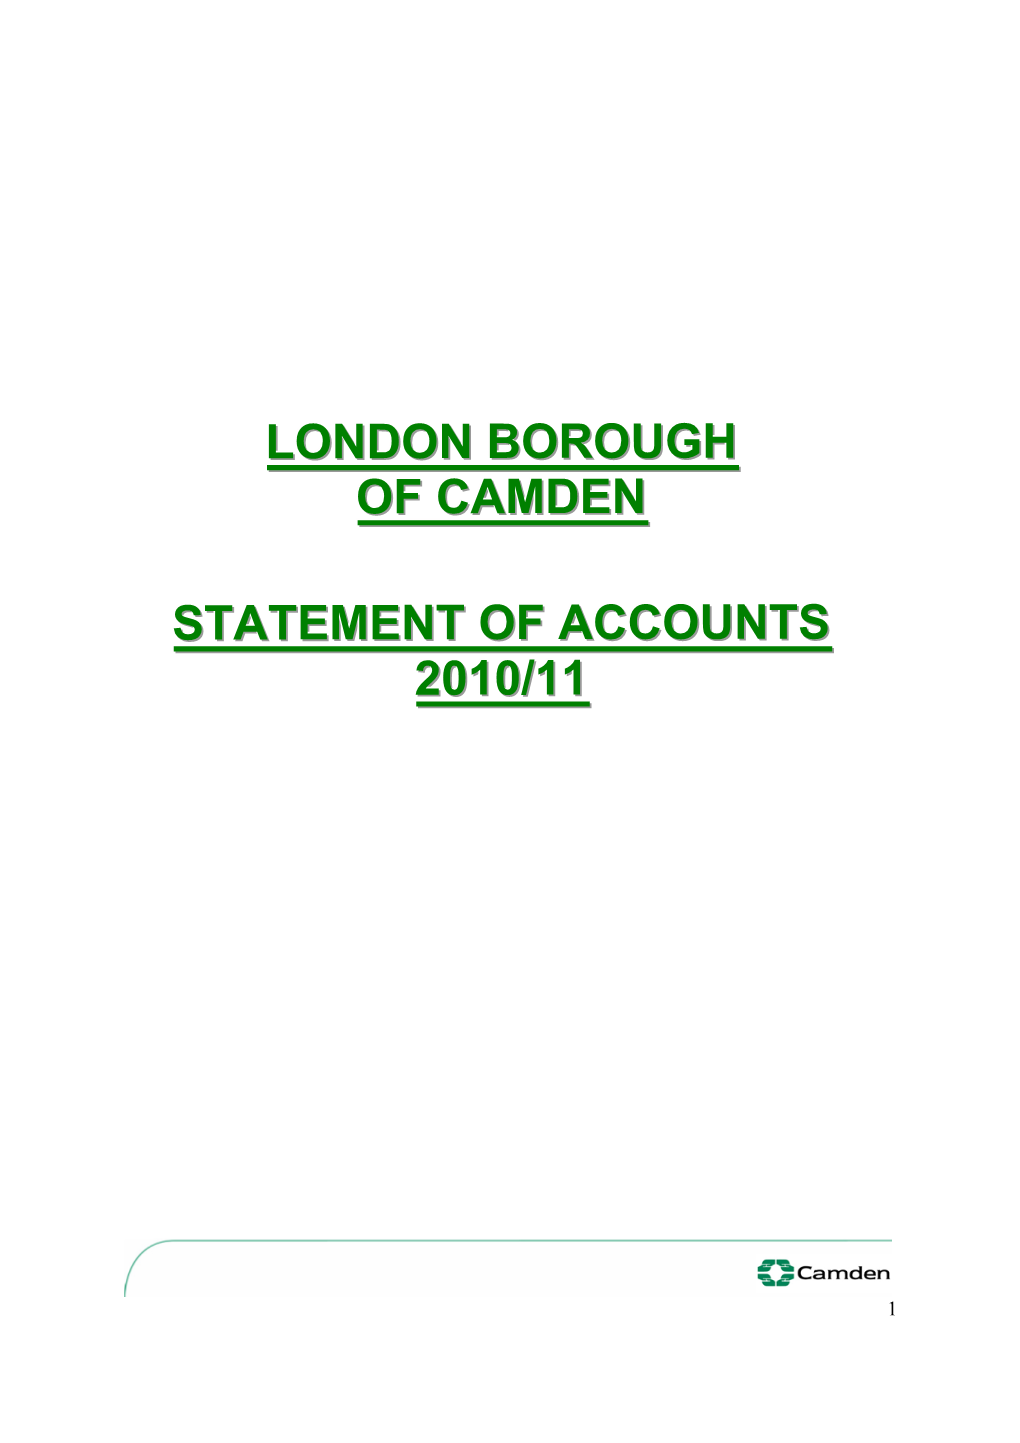 Statement of Accounts 2010/11